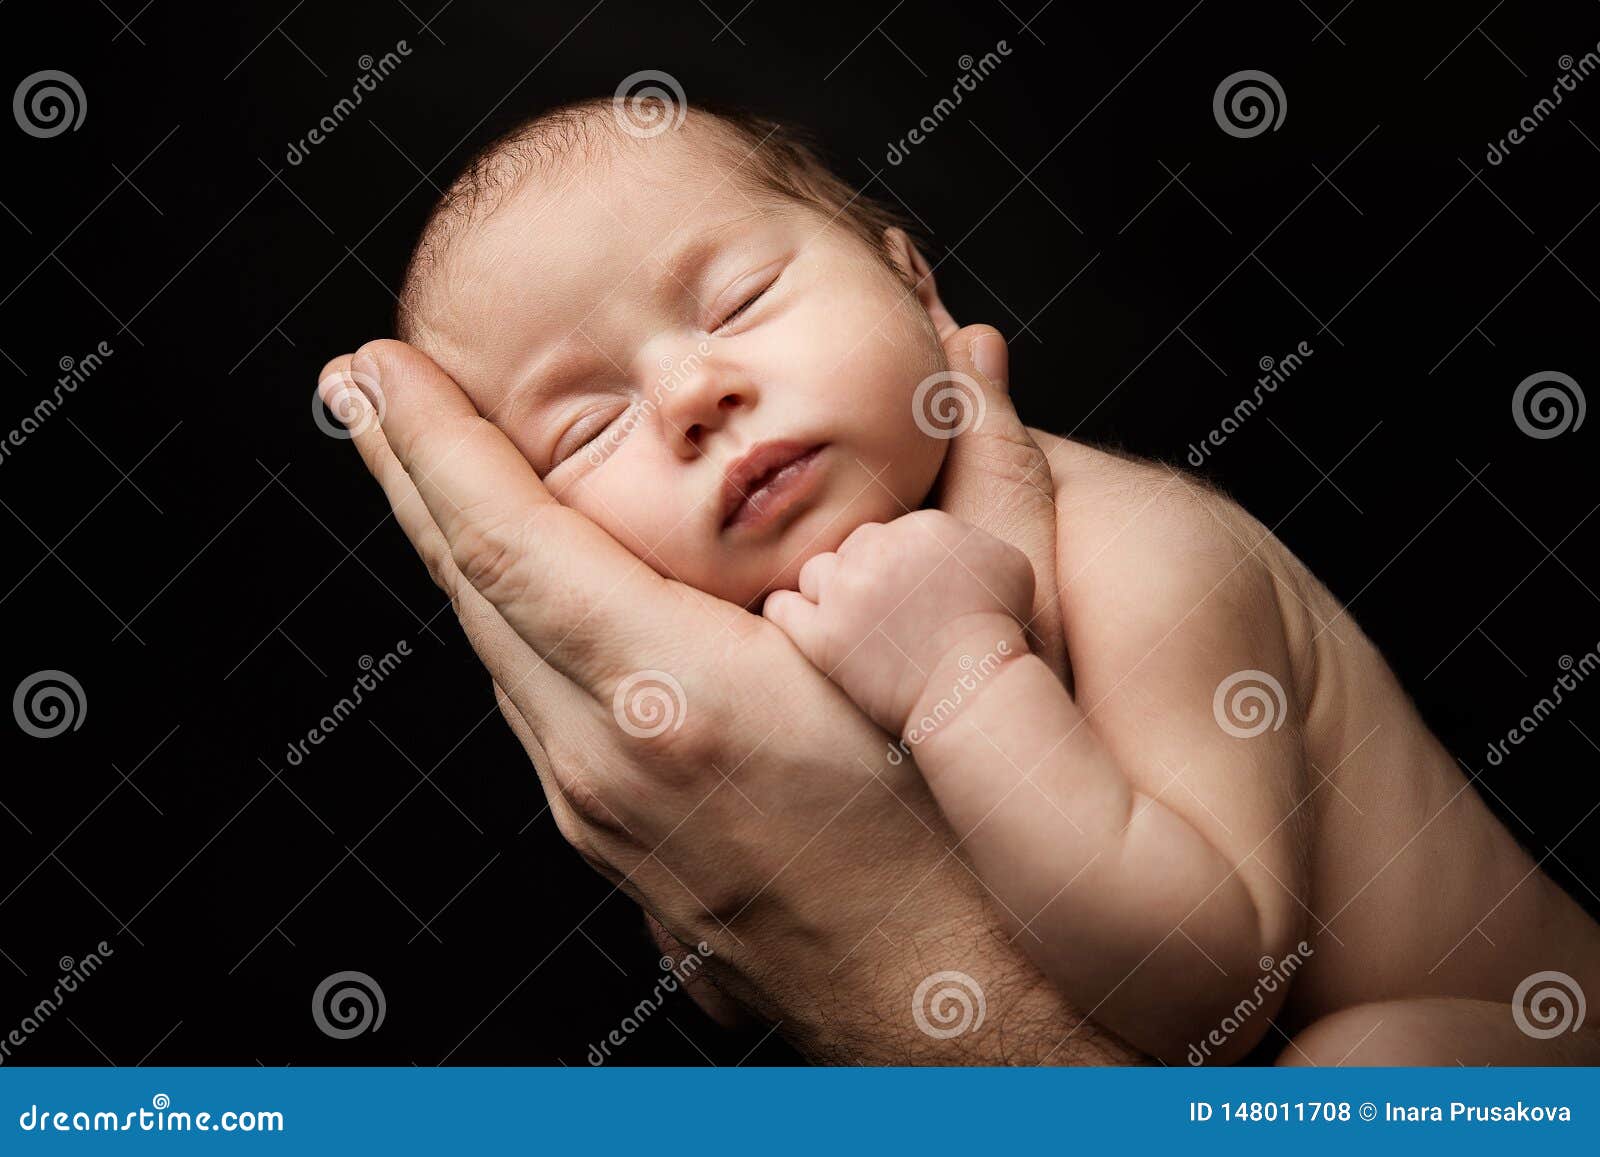 newborn baby sleeping on father hand, new born kid studio portrait